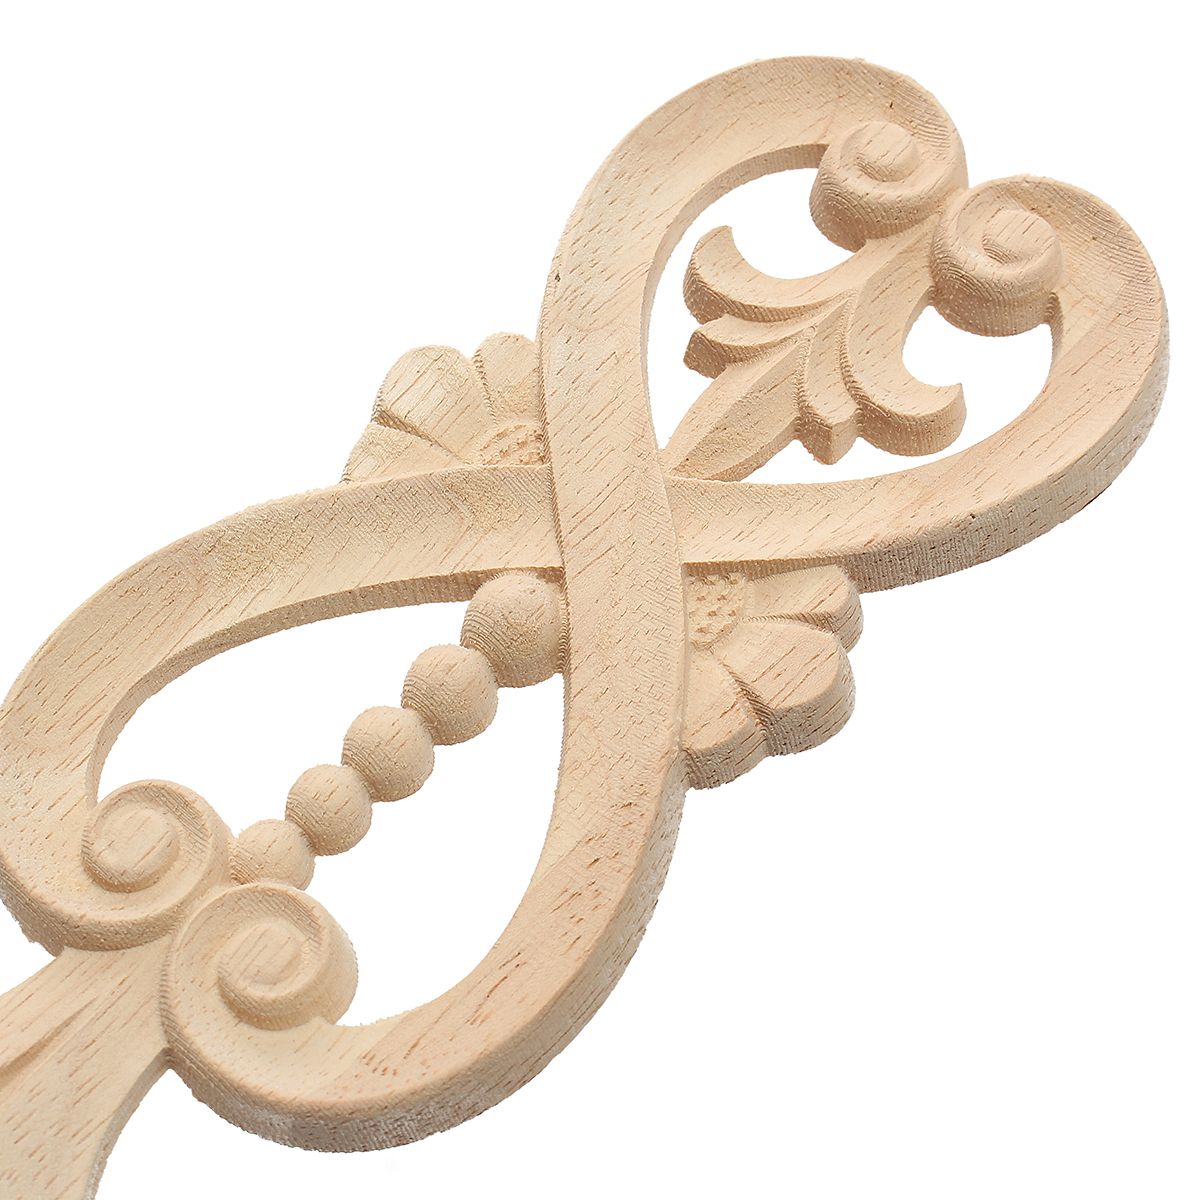 Wood-Carving-Applique-Unpainted-Flower-Onlay-Decal-Furniture-Cabinet-Door-Decor-36x7cm-1168354